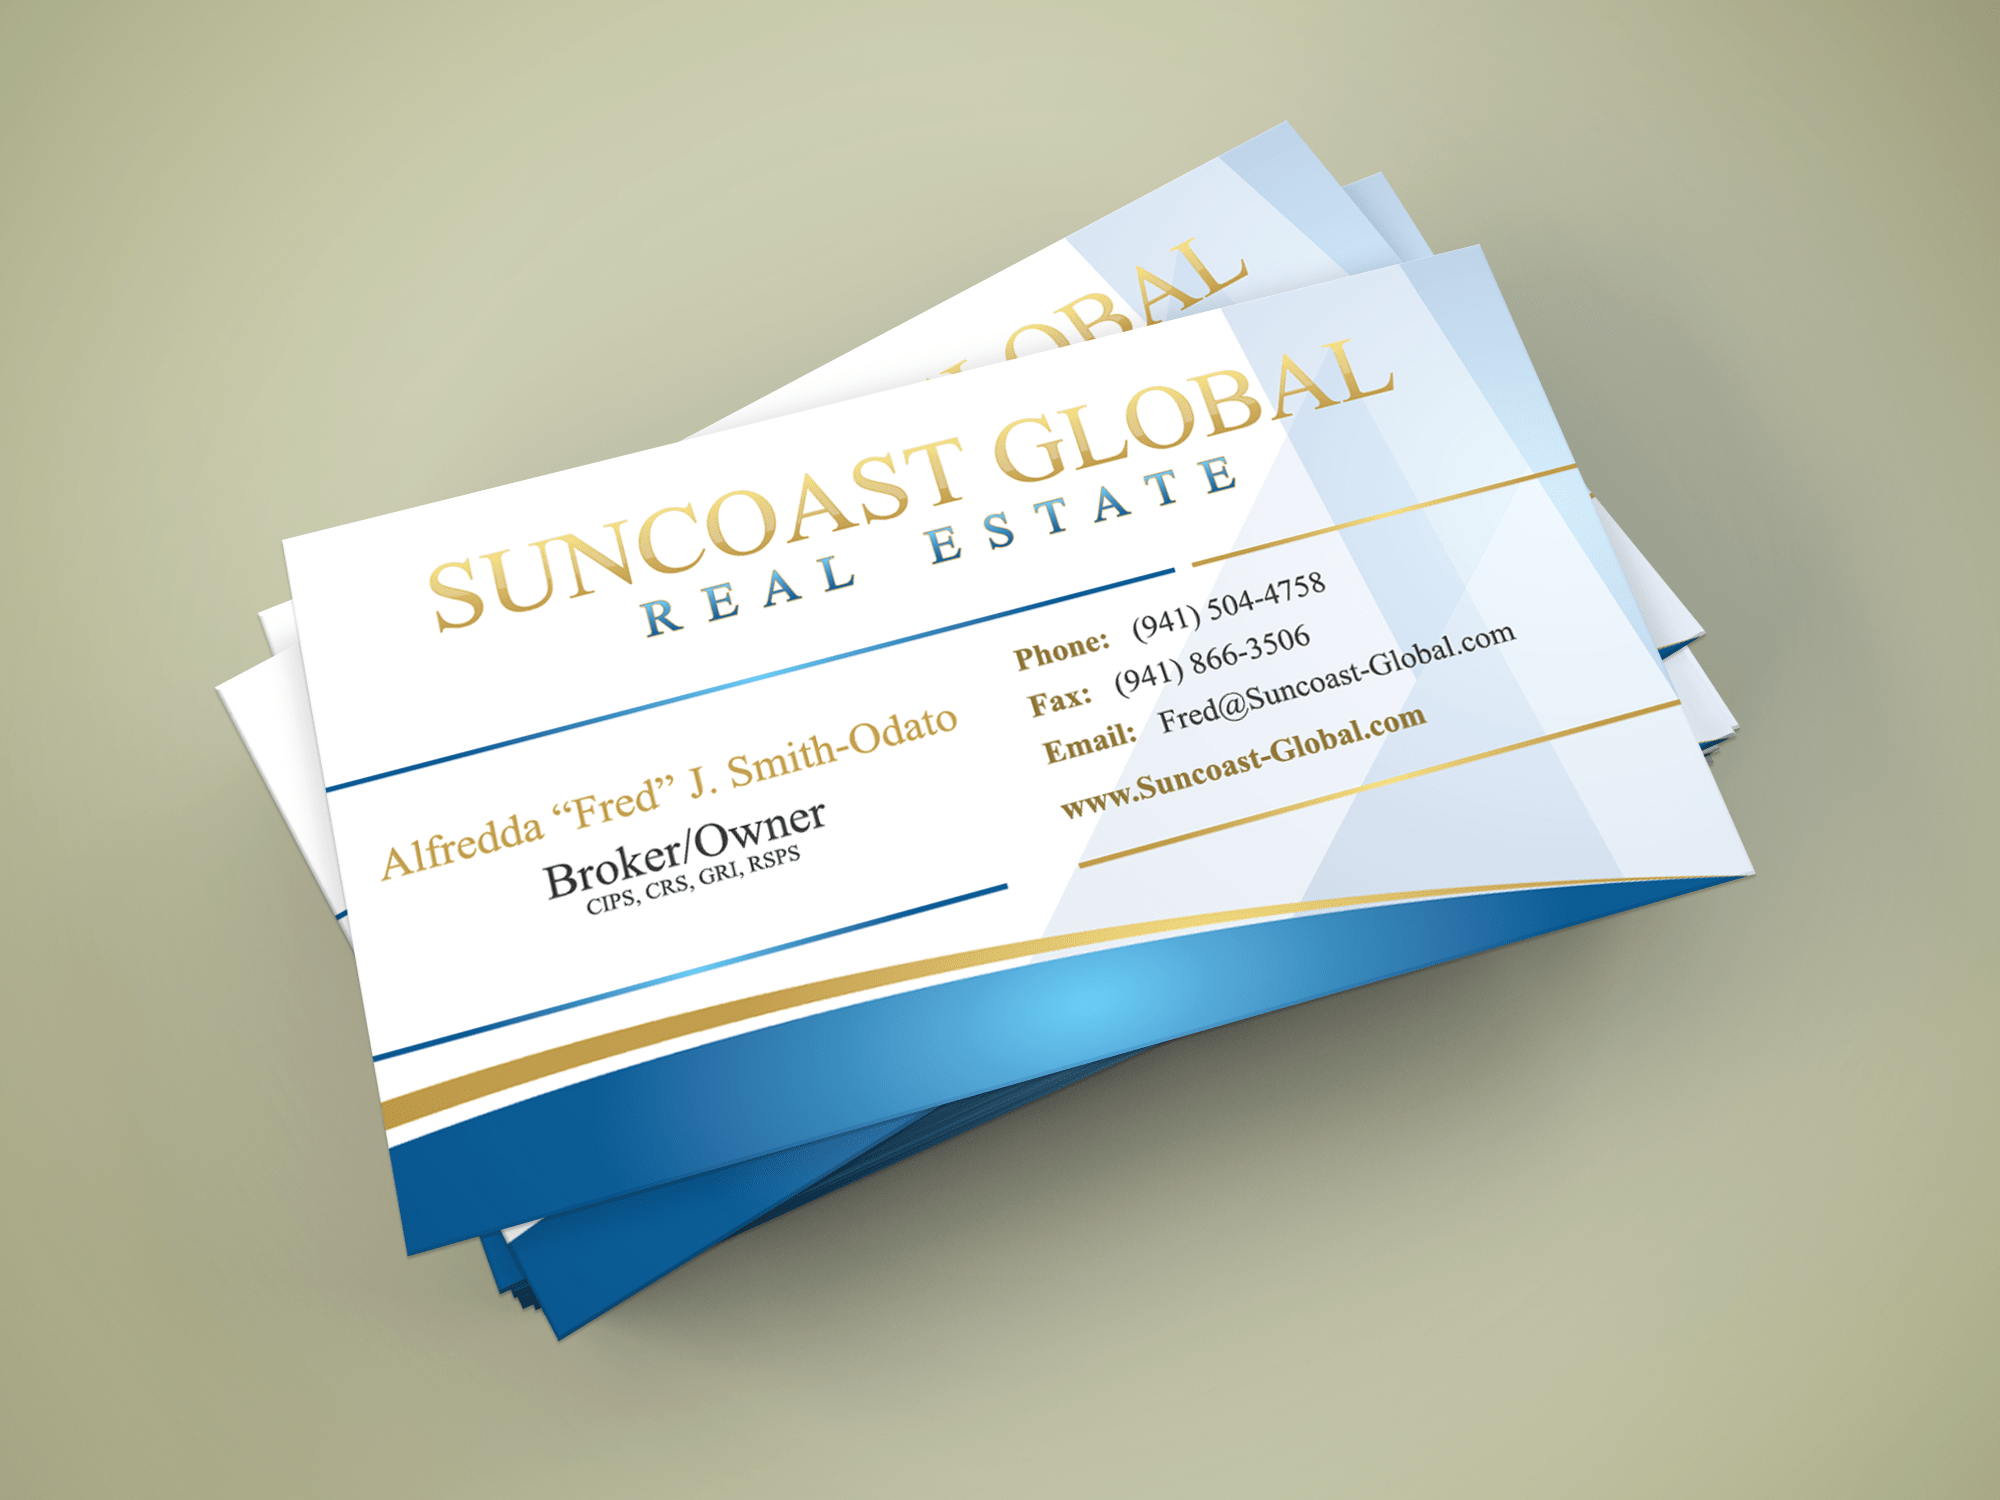 Suncoast Global CARD13